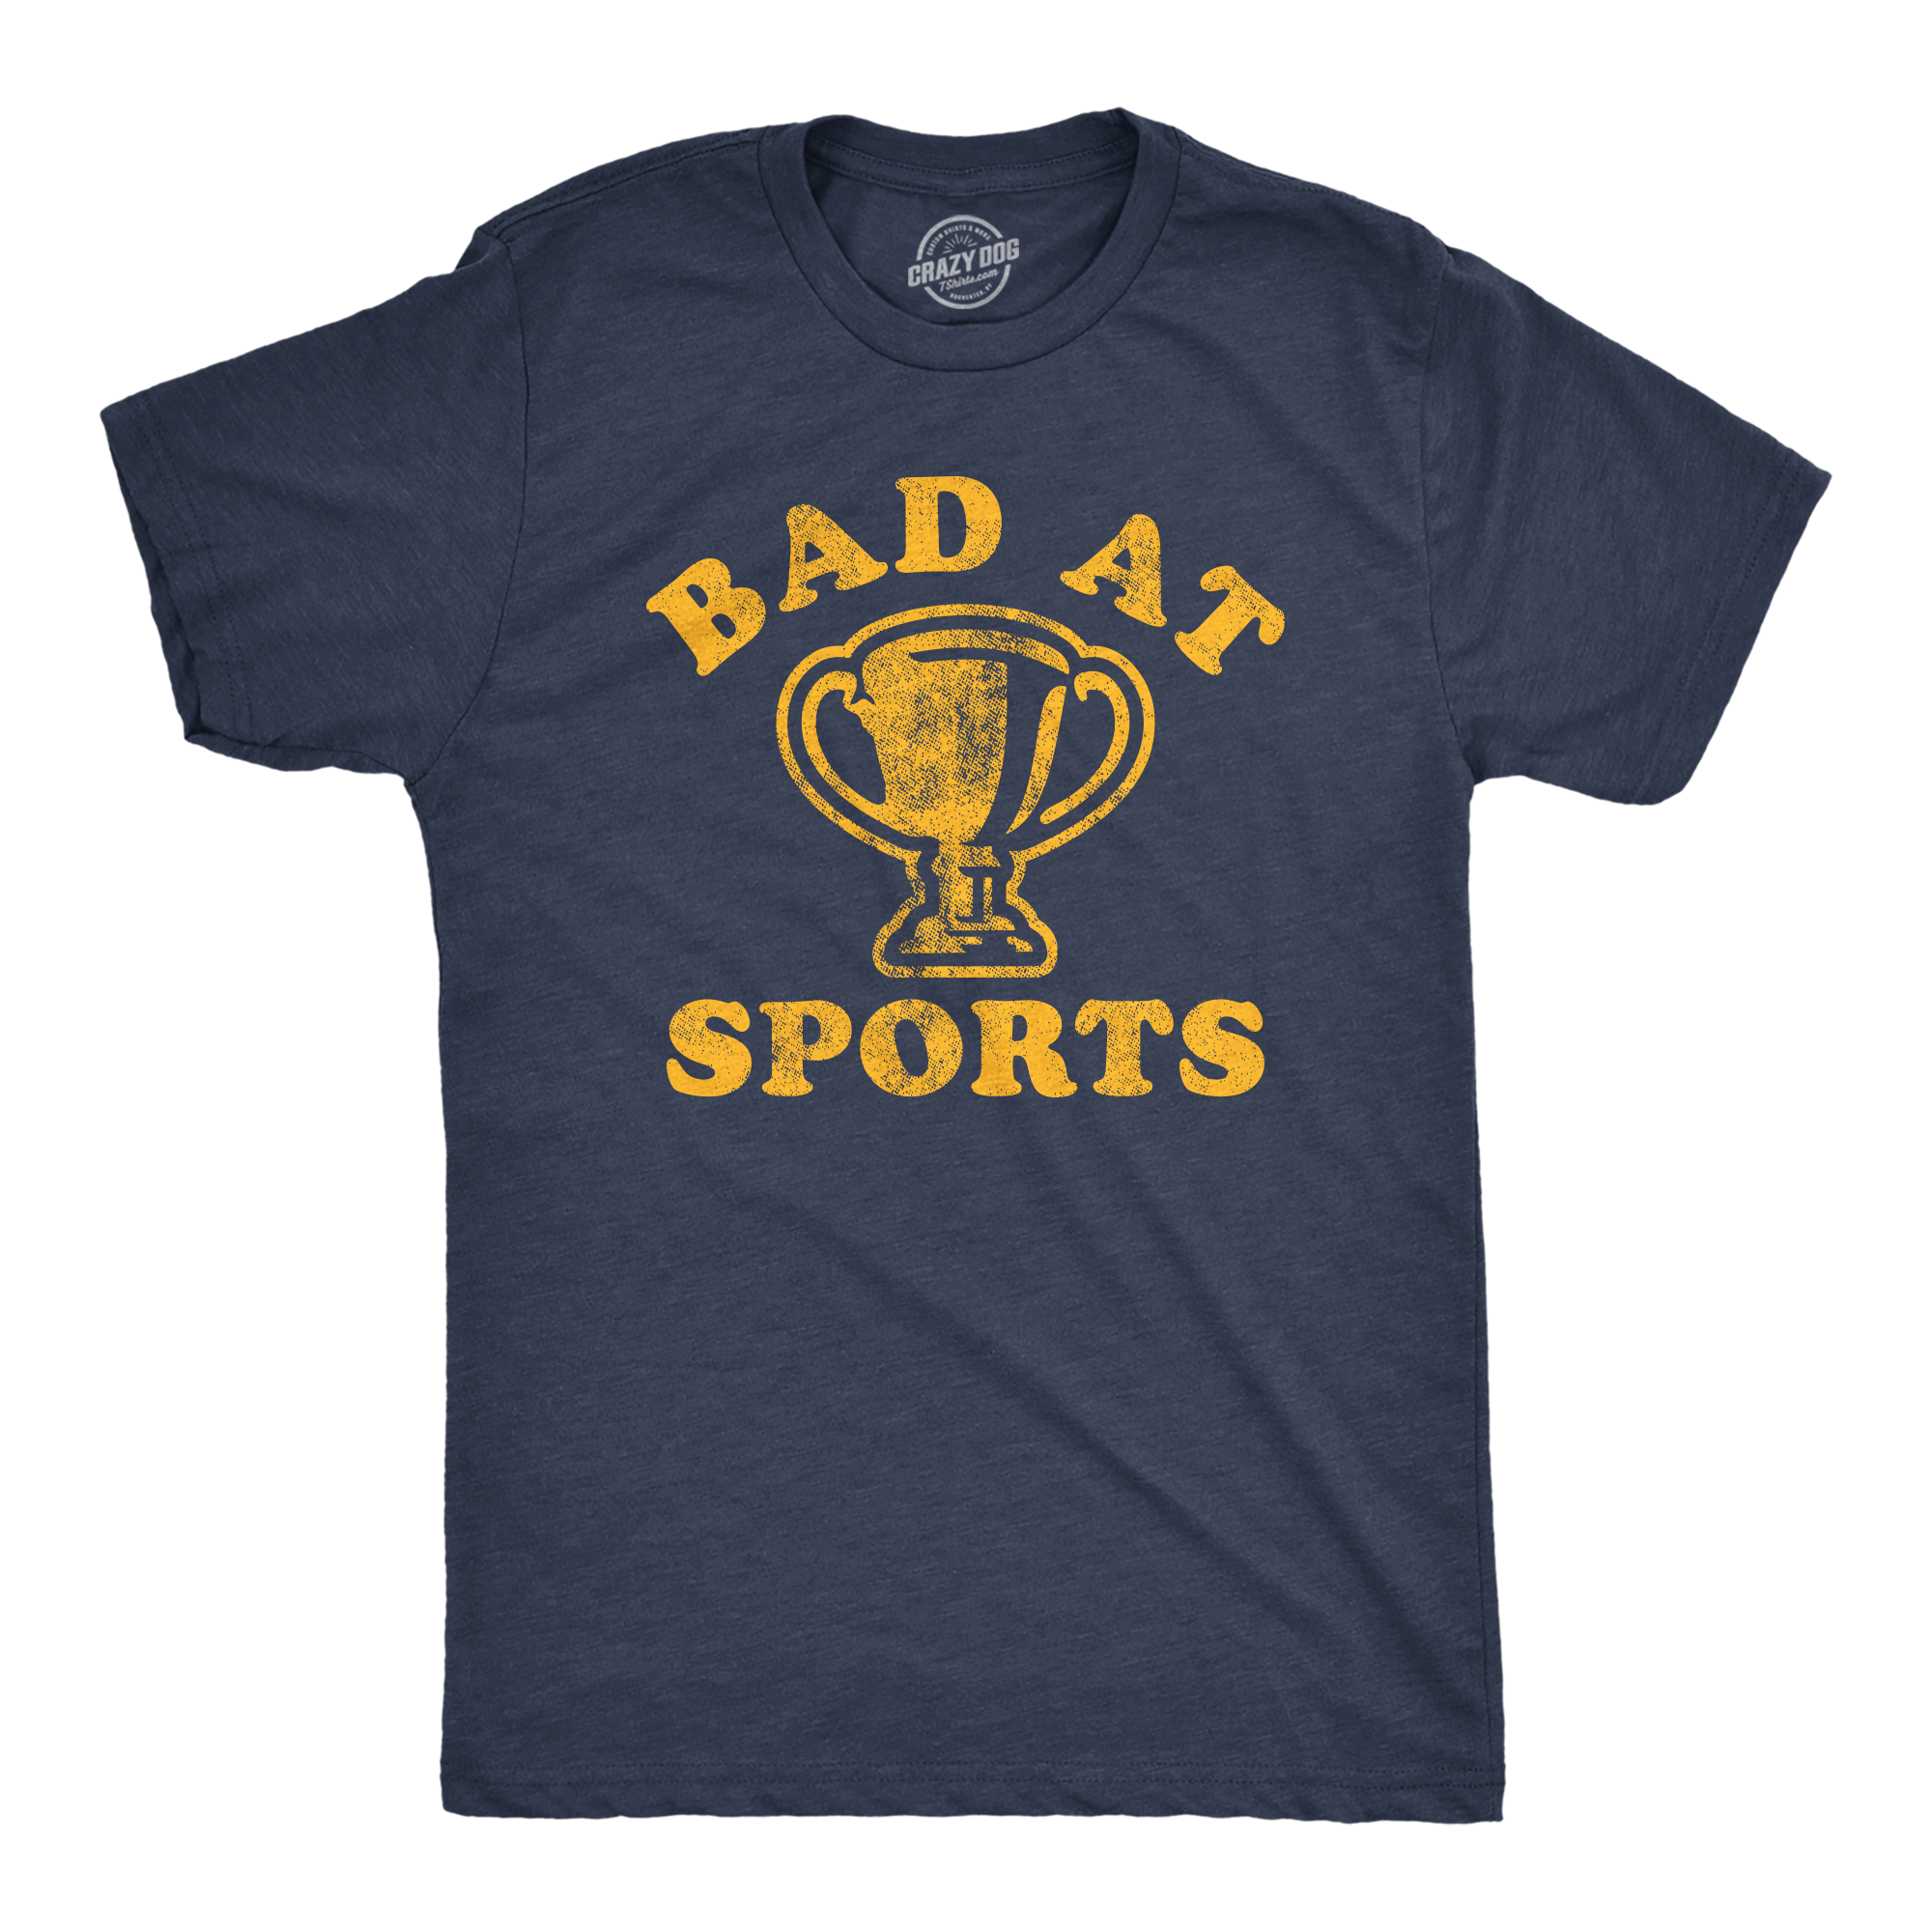 Funny Heather Navy - Bad At Sports Bad At Sports Mens T Shirt Nerdy sarcastic Tee